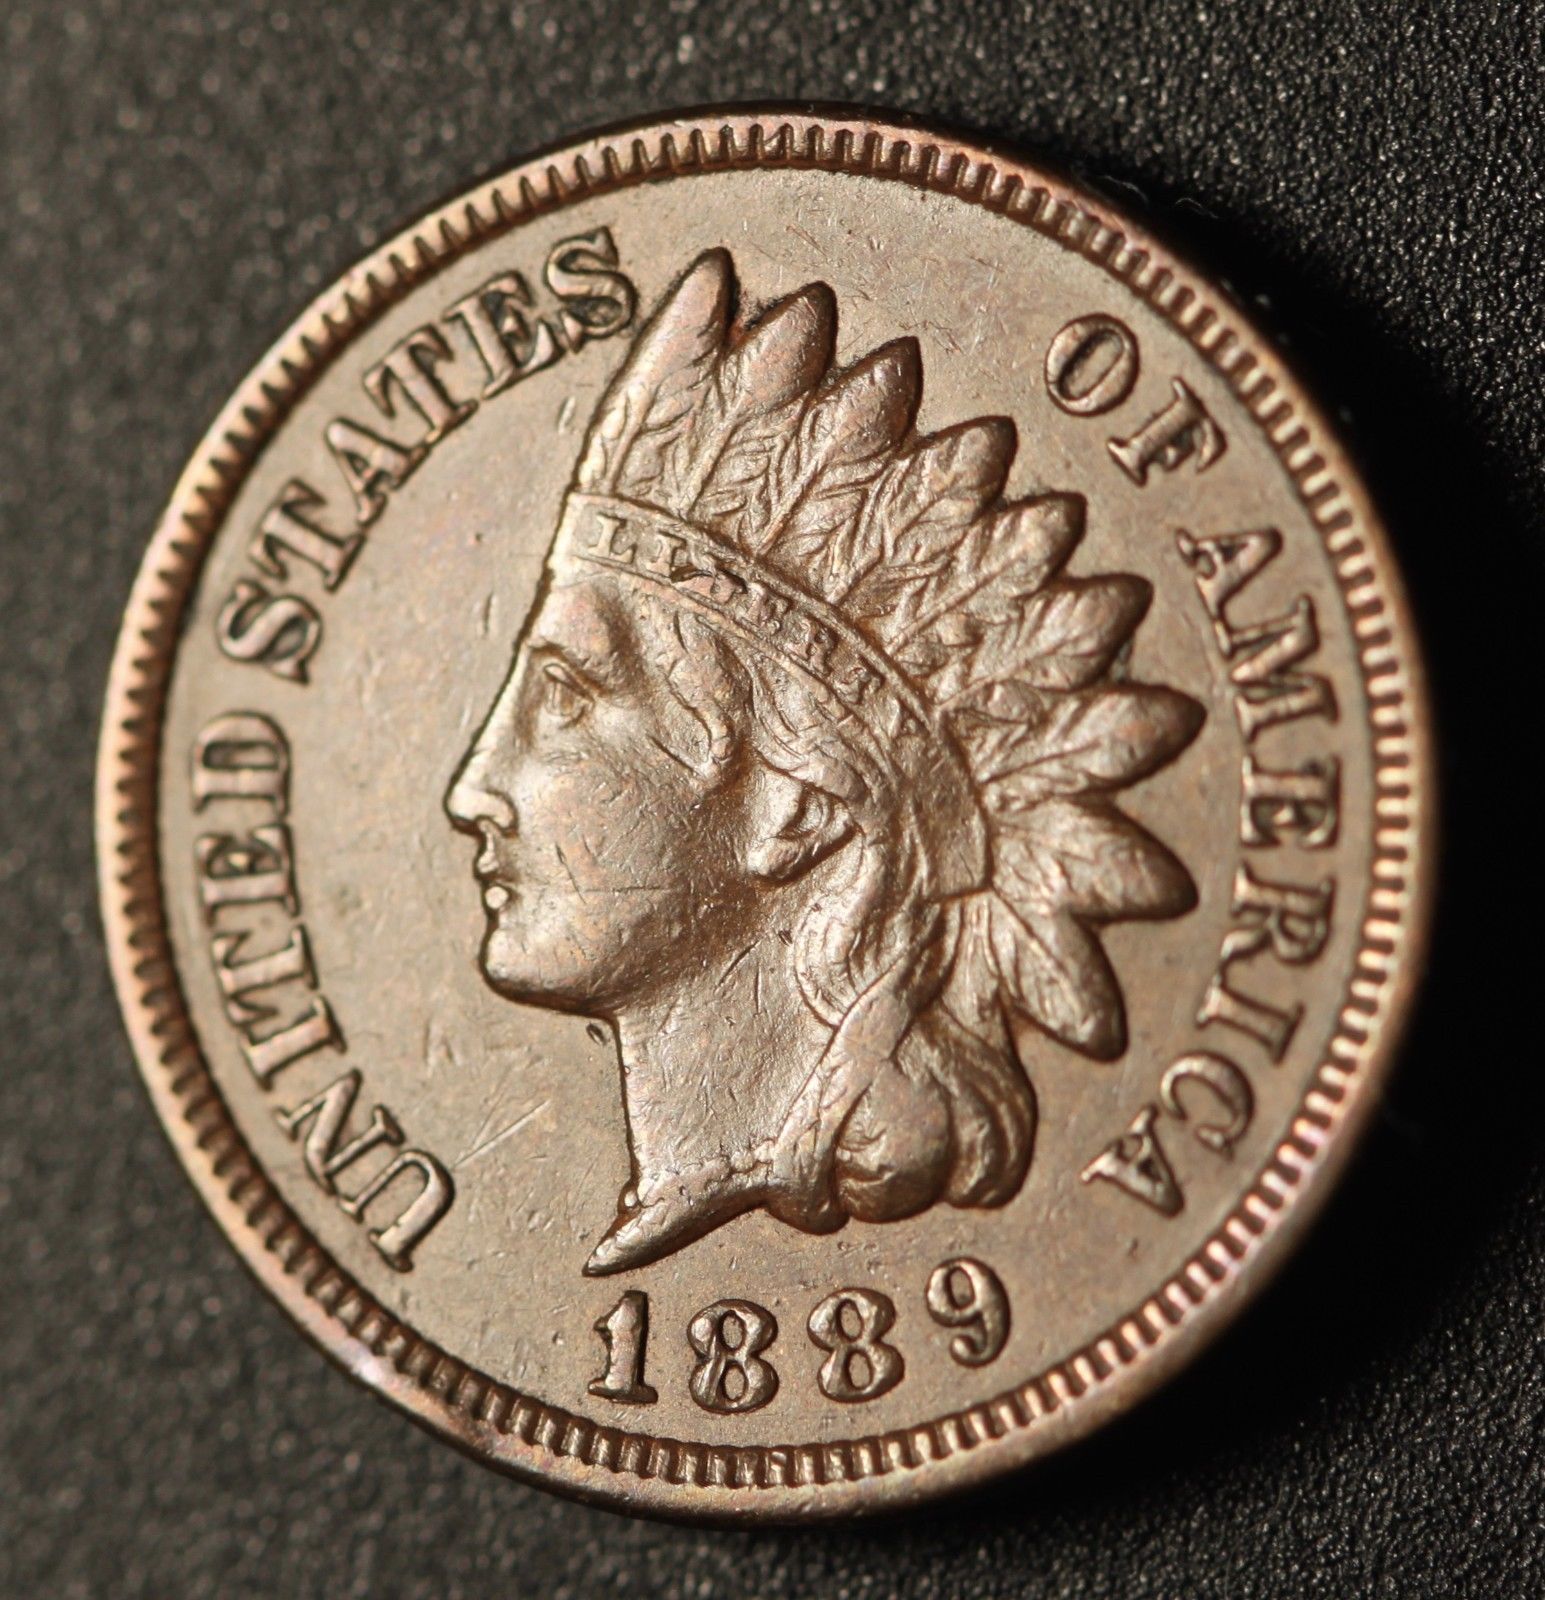 1889 RPD-002 - Indian Head Penny - Photo Courtesy of Ed Nathanson